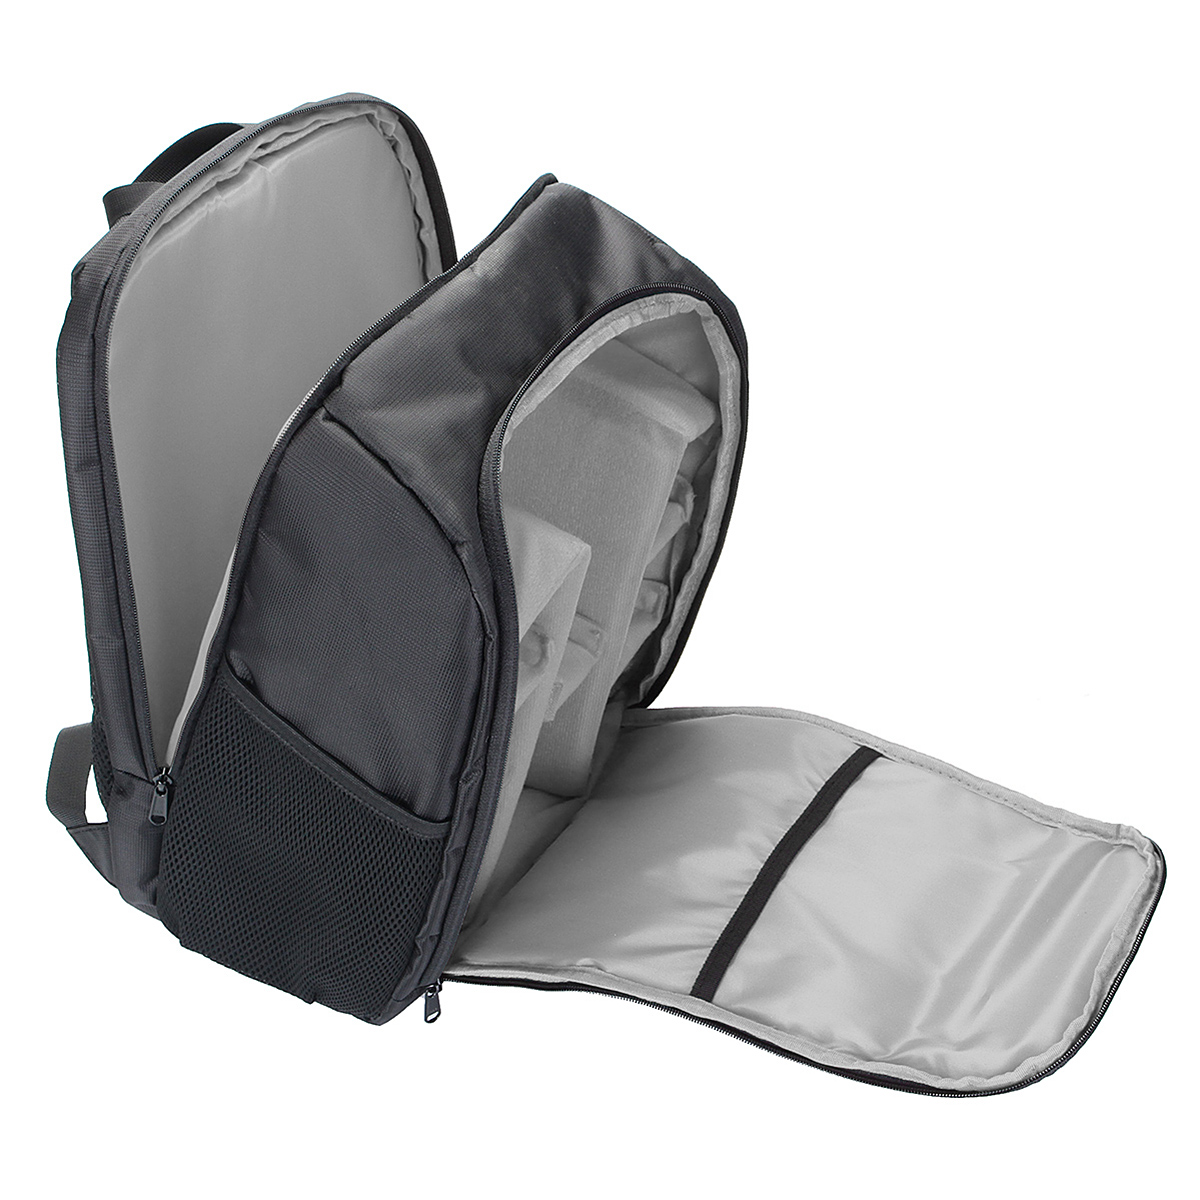 Find Waterproof Backpack Shoulder Bag Laptop Case For DSLR Camera Lens Accessories for Sale on Gipsybee.com with cryptocurrencies